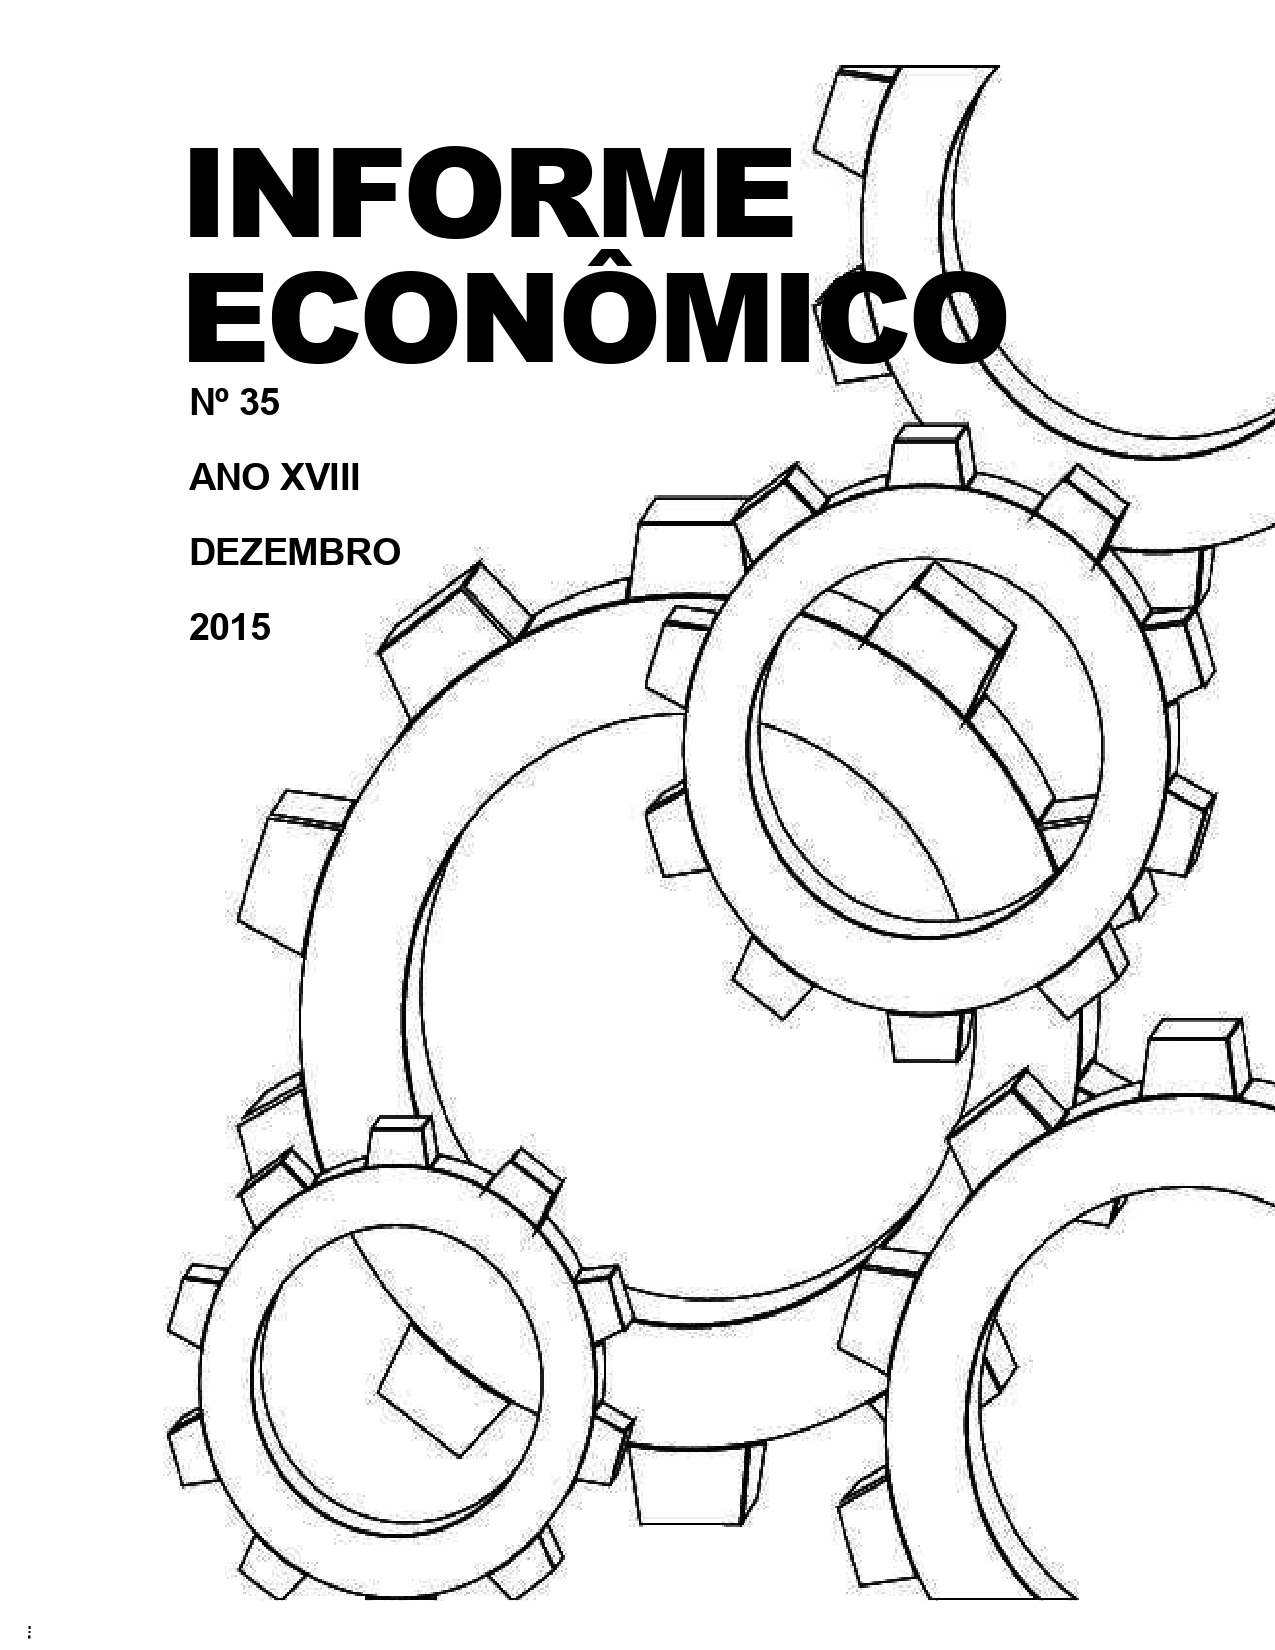 					Visualizar v. 35 n. 2 (2015): INFORME ECONÔMICO (UFPI), Ano 18, dezembro
				